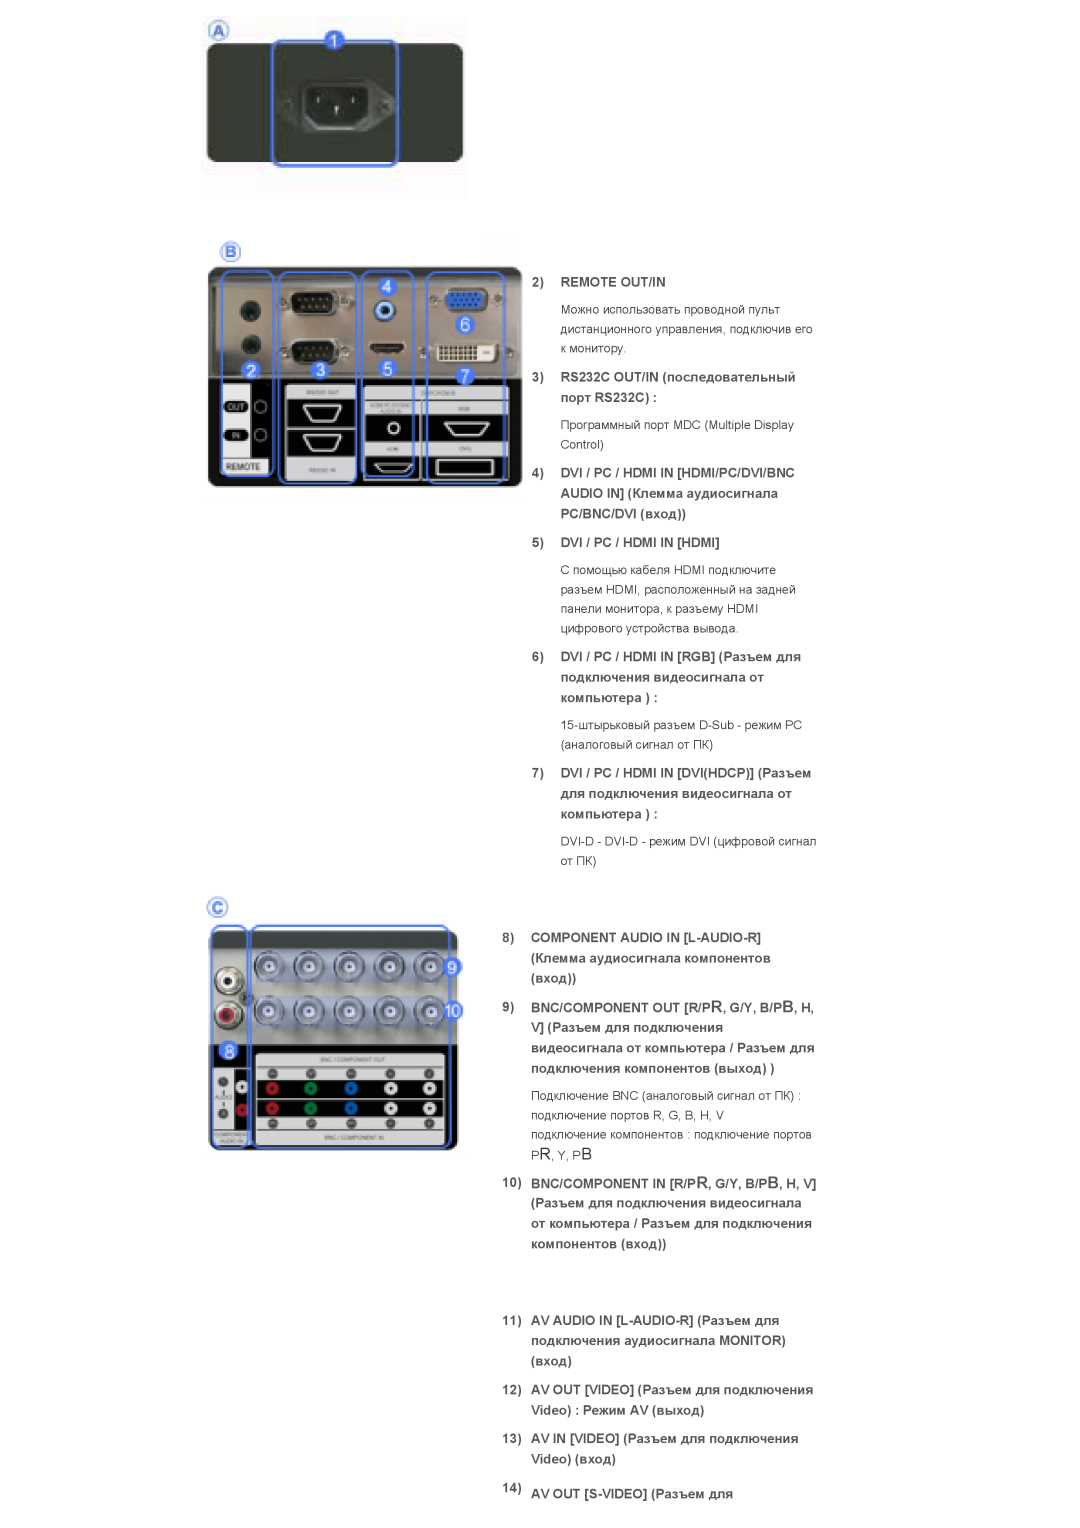 Samsung LS70BPTNB/EDC manual Remote Out/In, 3 RS232C OUT/IN последовательный порт RS232C, AV OUT S-VIDEO Разъем для 